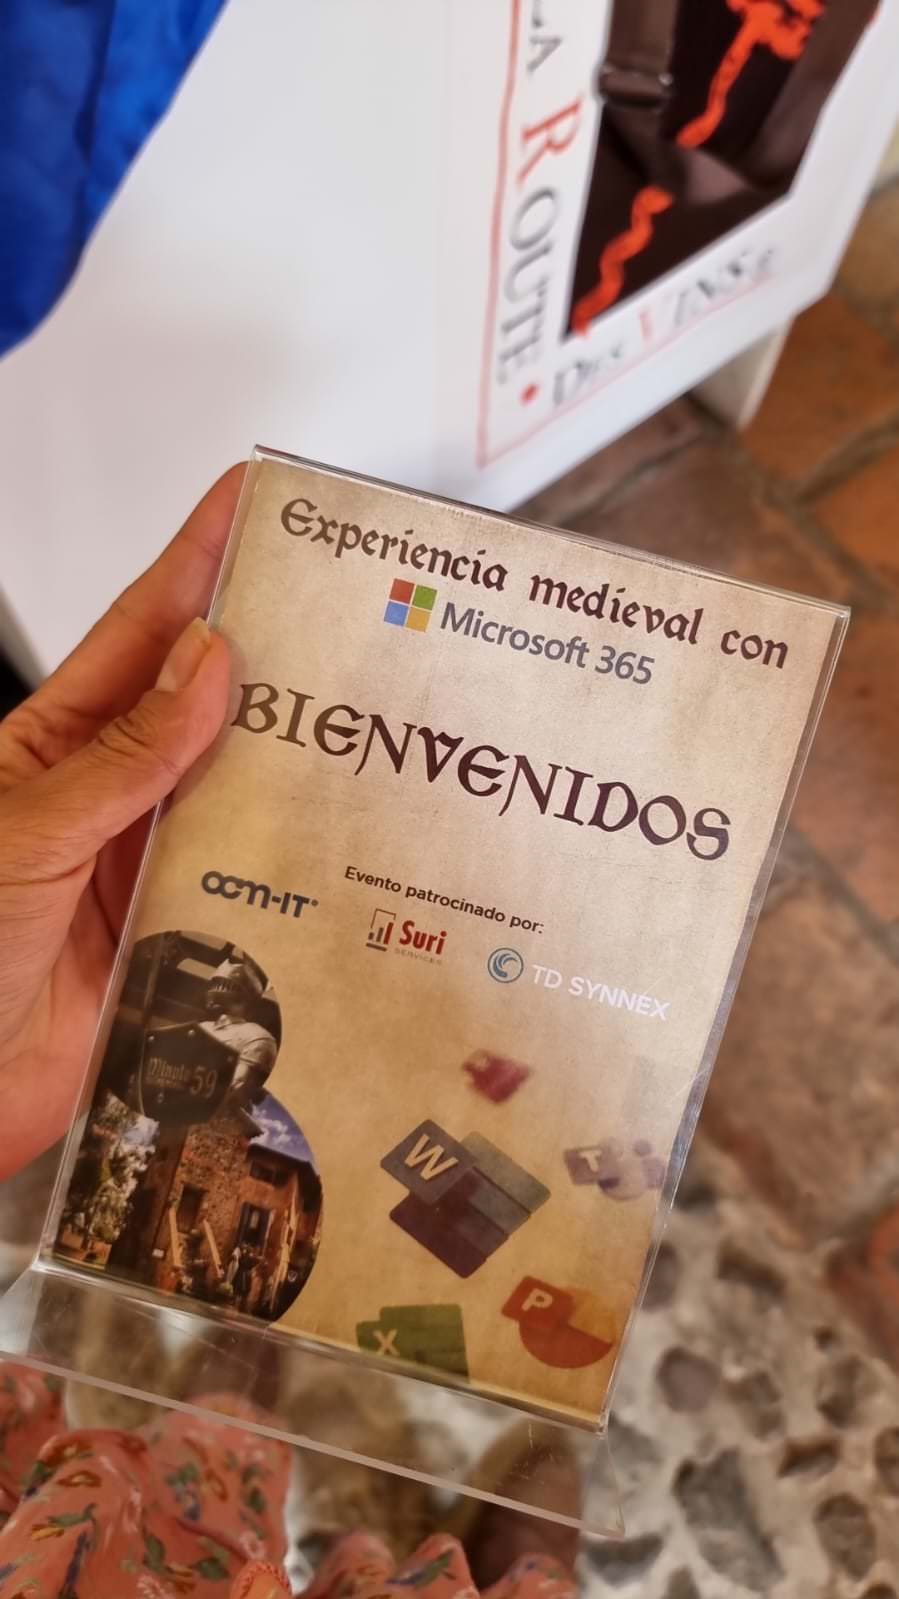 Experiencia Medieval con Microsoft 365